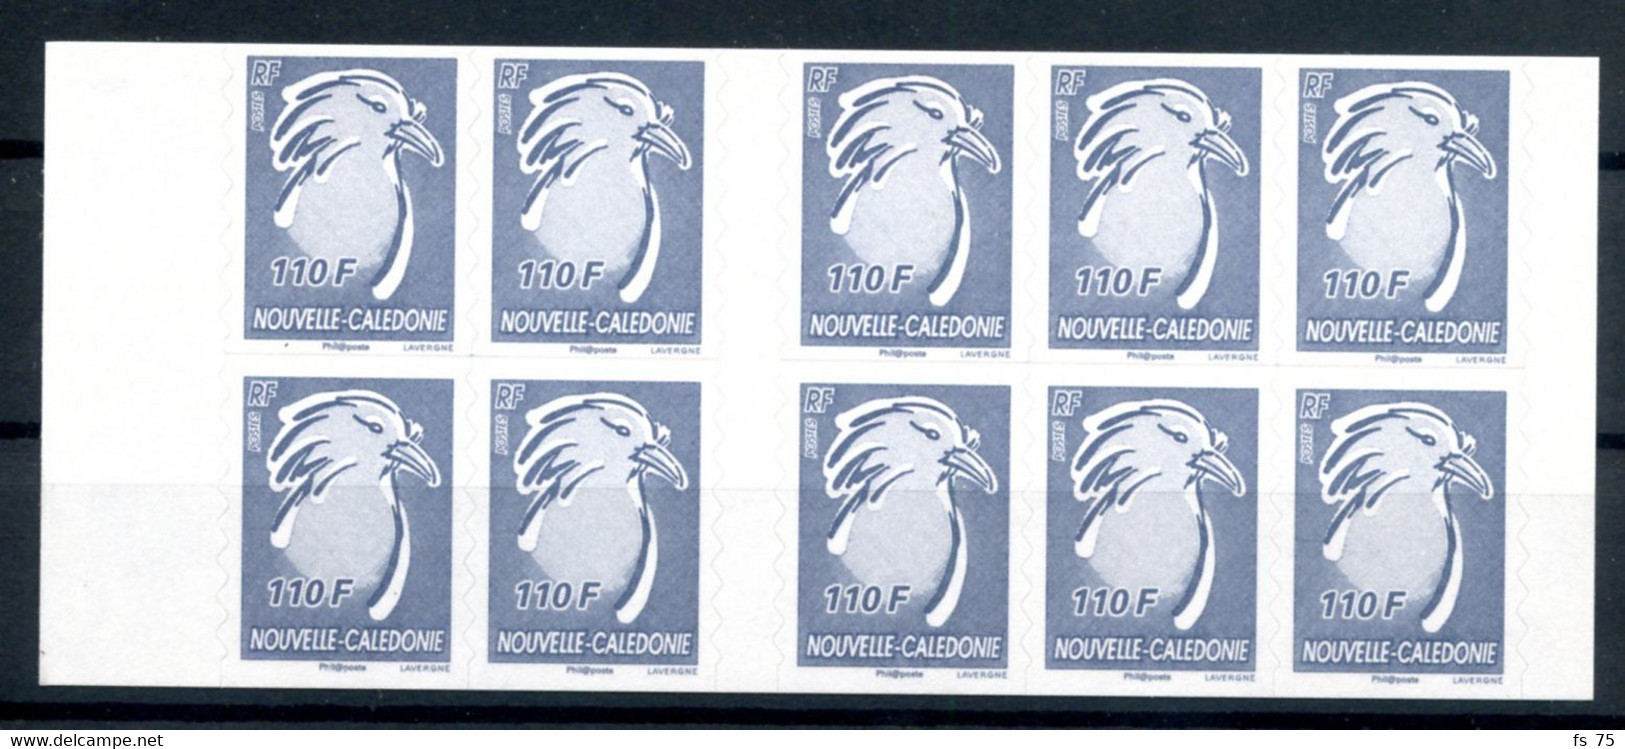 NOUVELLE CALEDONIE N°976 CAGOU - CARNET DE 10 TIMBRES - Unused Stamps